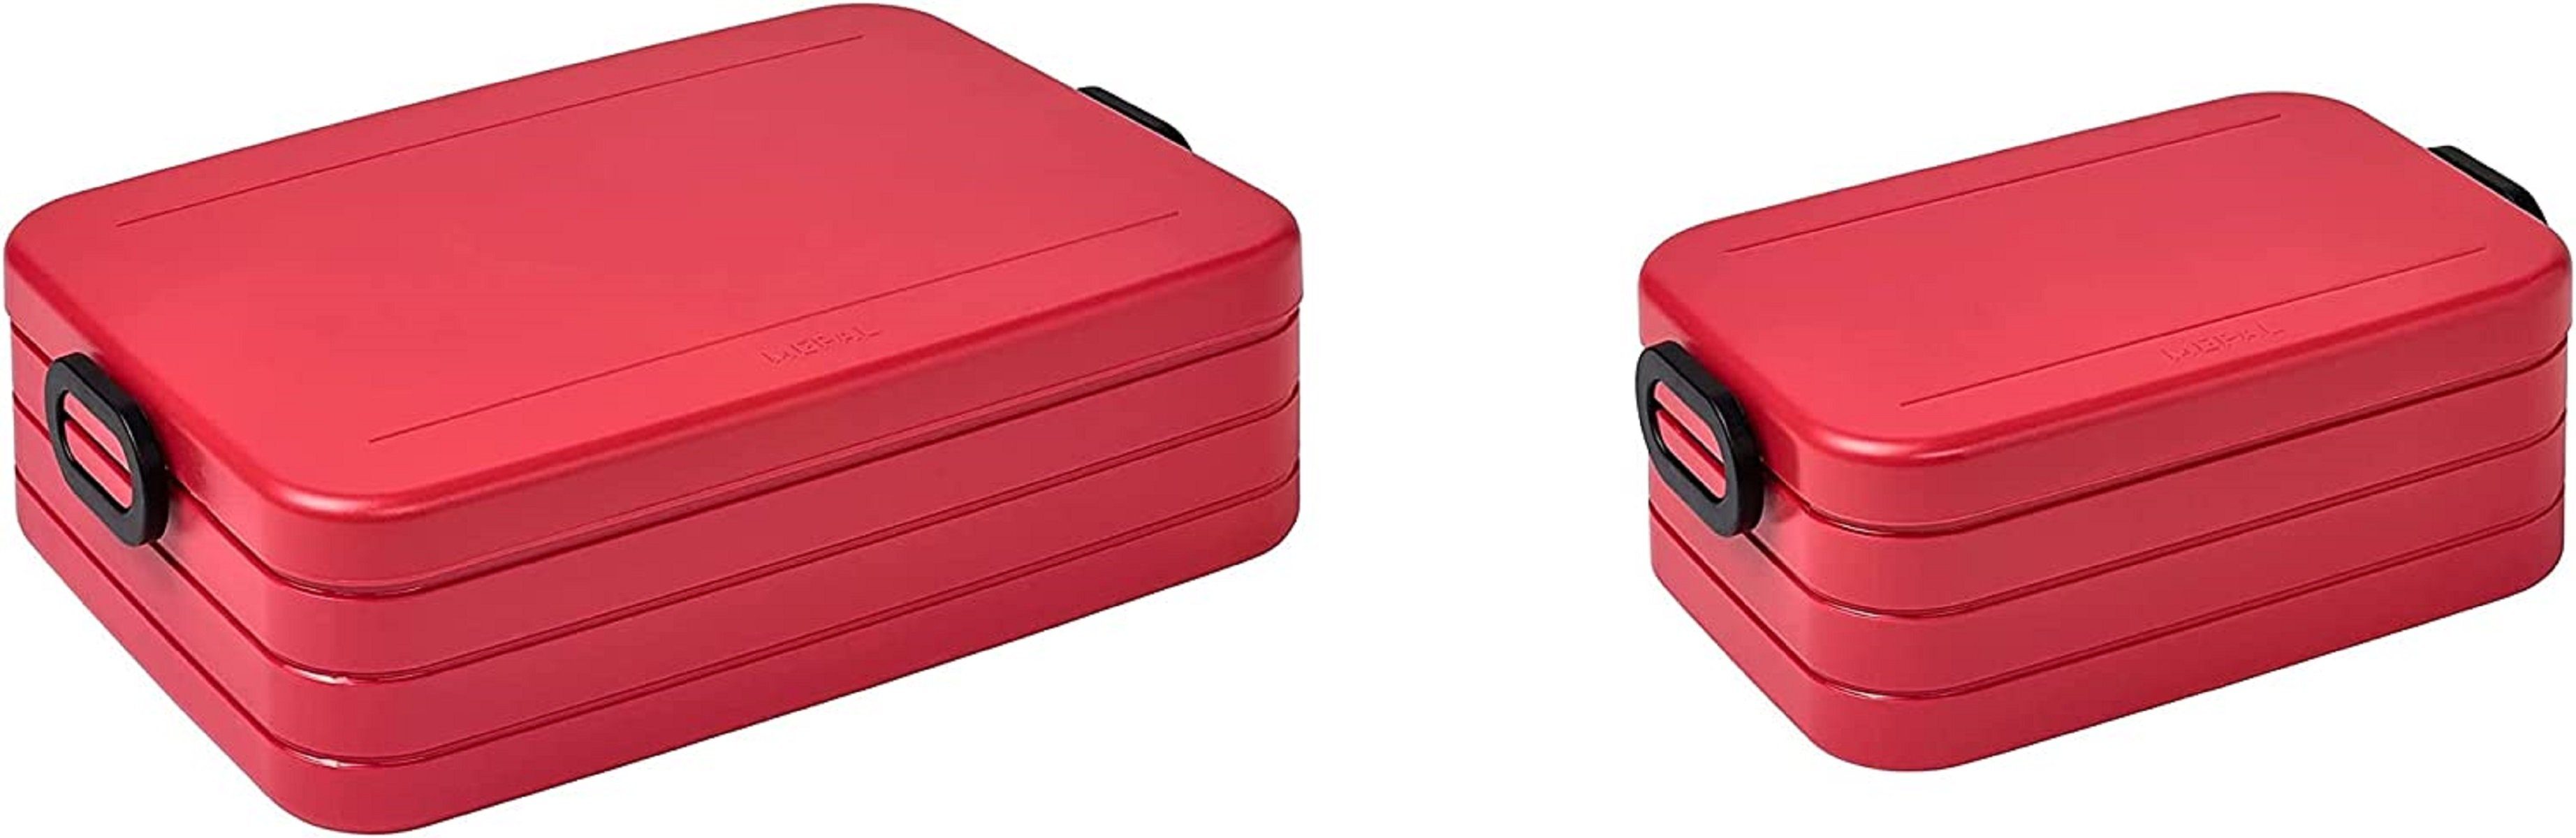 Mepal Lunchbox Mepal Take a Break Set – Nordic Red – Groß / Klein – Lunchbox mit Trennwand, Acrylnitril-Butadien-Styrol (ABS), (Set, 2-tlg., Lunchbox mit Trennwand groß und klein) | Lunchboxen